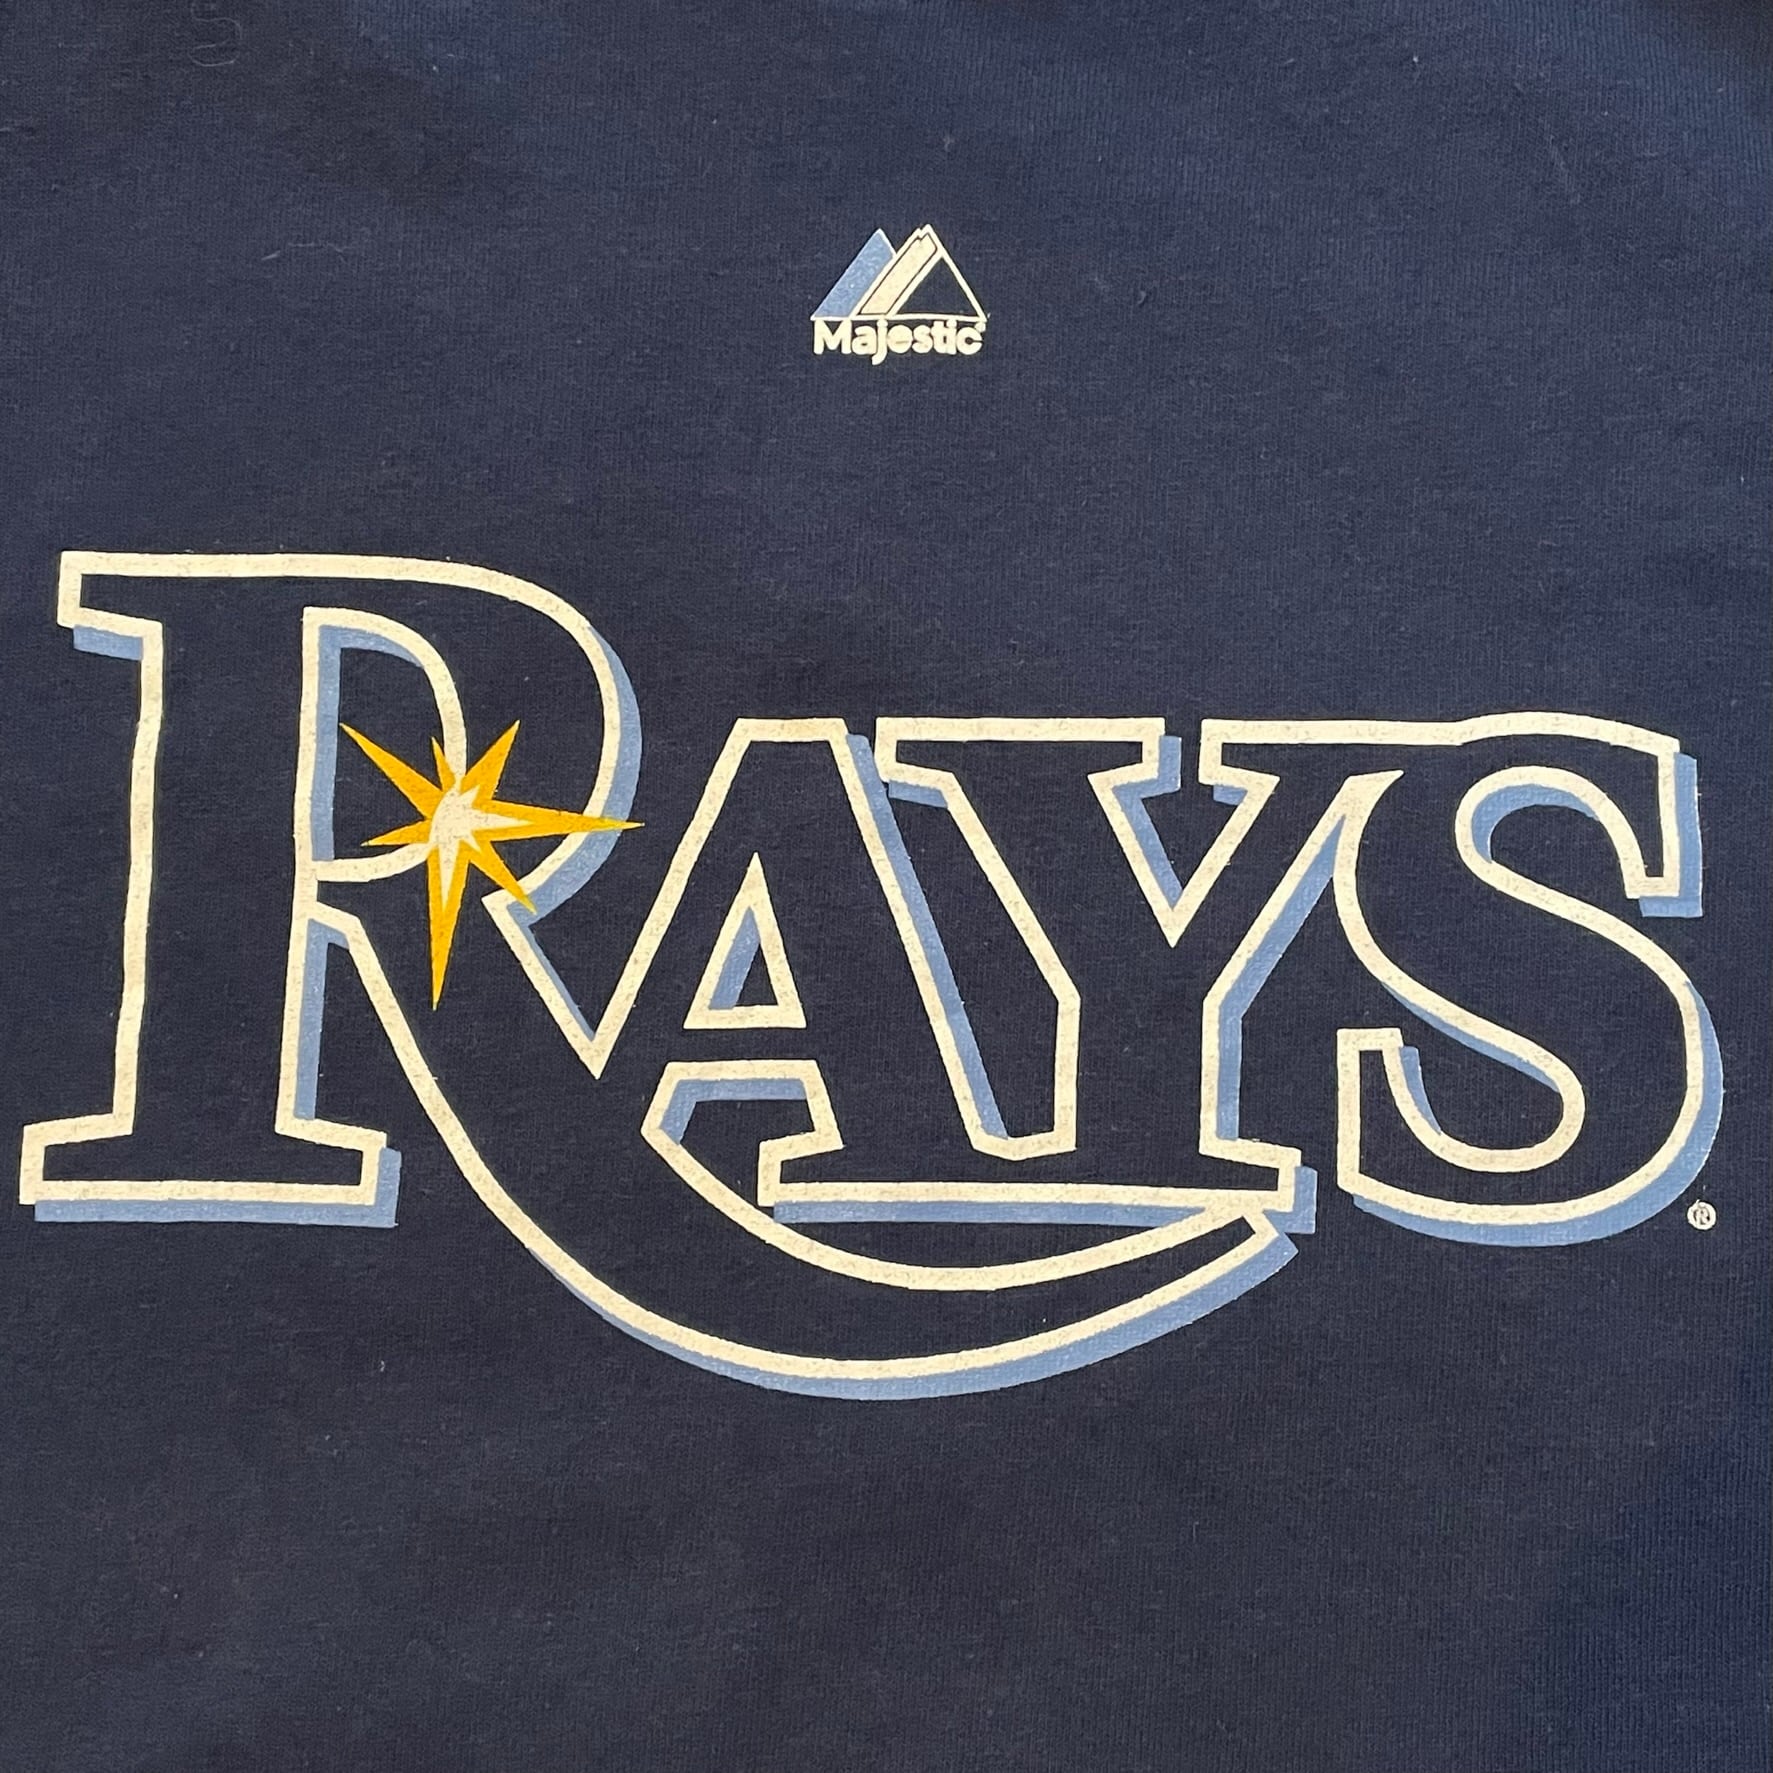 90s USA製 MAJESTIC MLB Rays レイズ Tシャツ